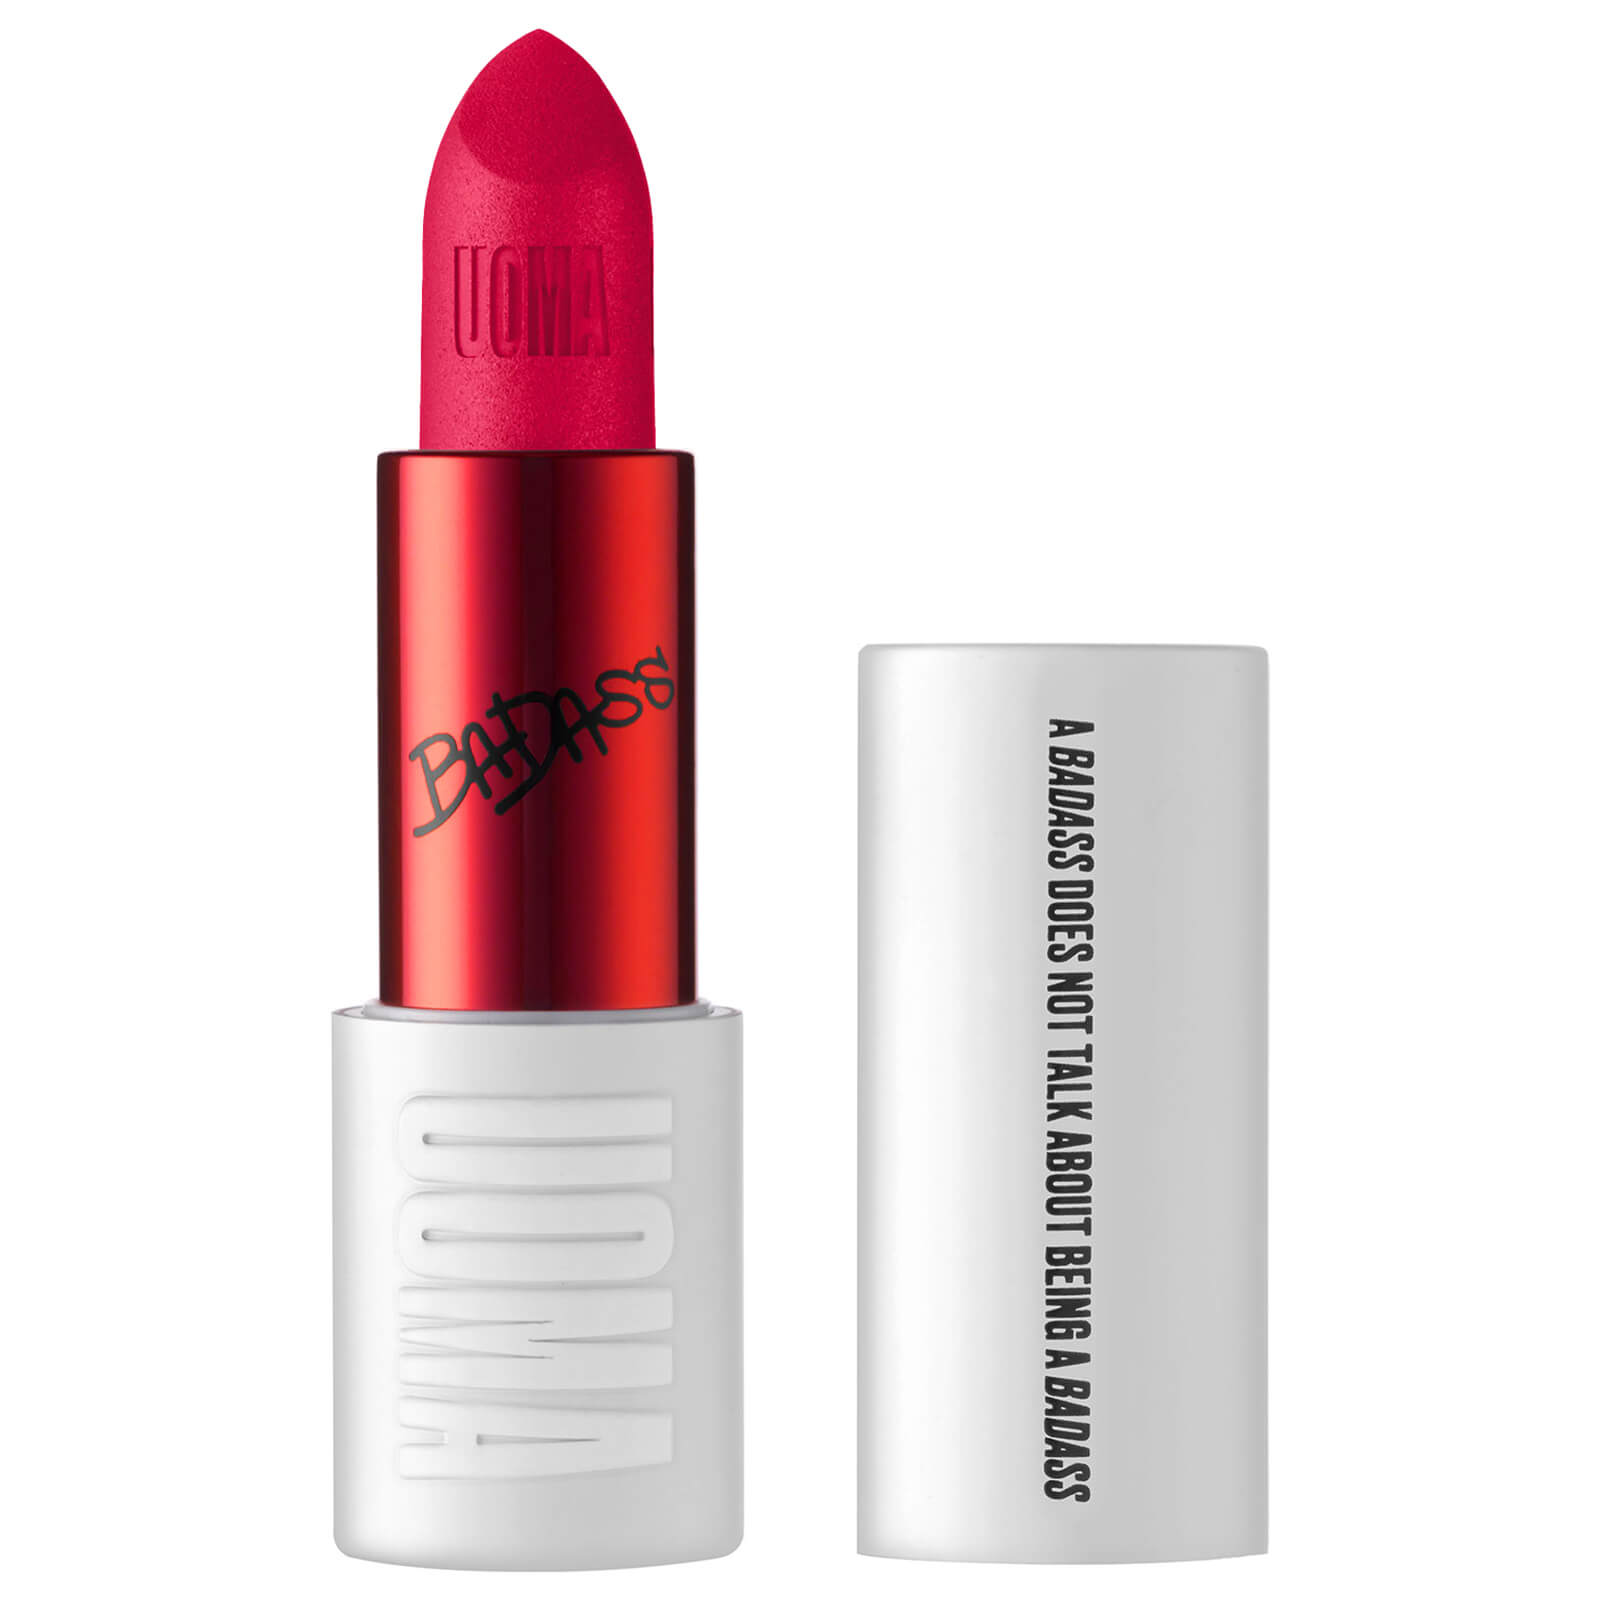 uoma beauty badass icon concentrated matte lipstick 3.5ml (verschiedene farbtÃ¶ne) - whitney